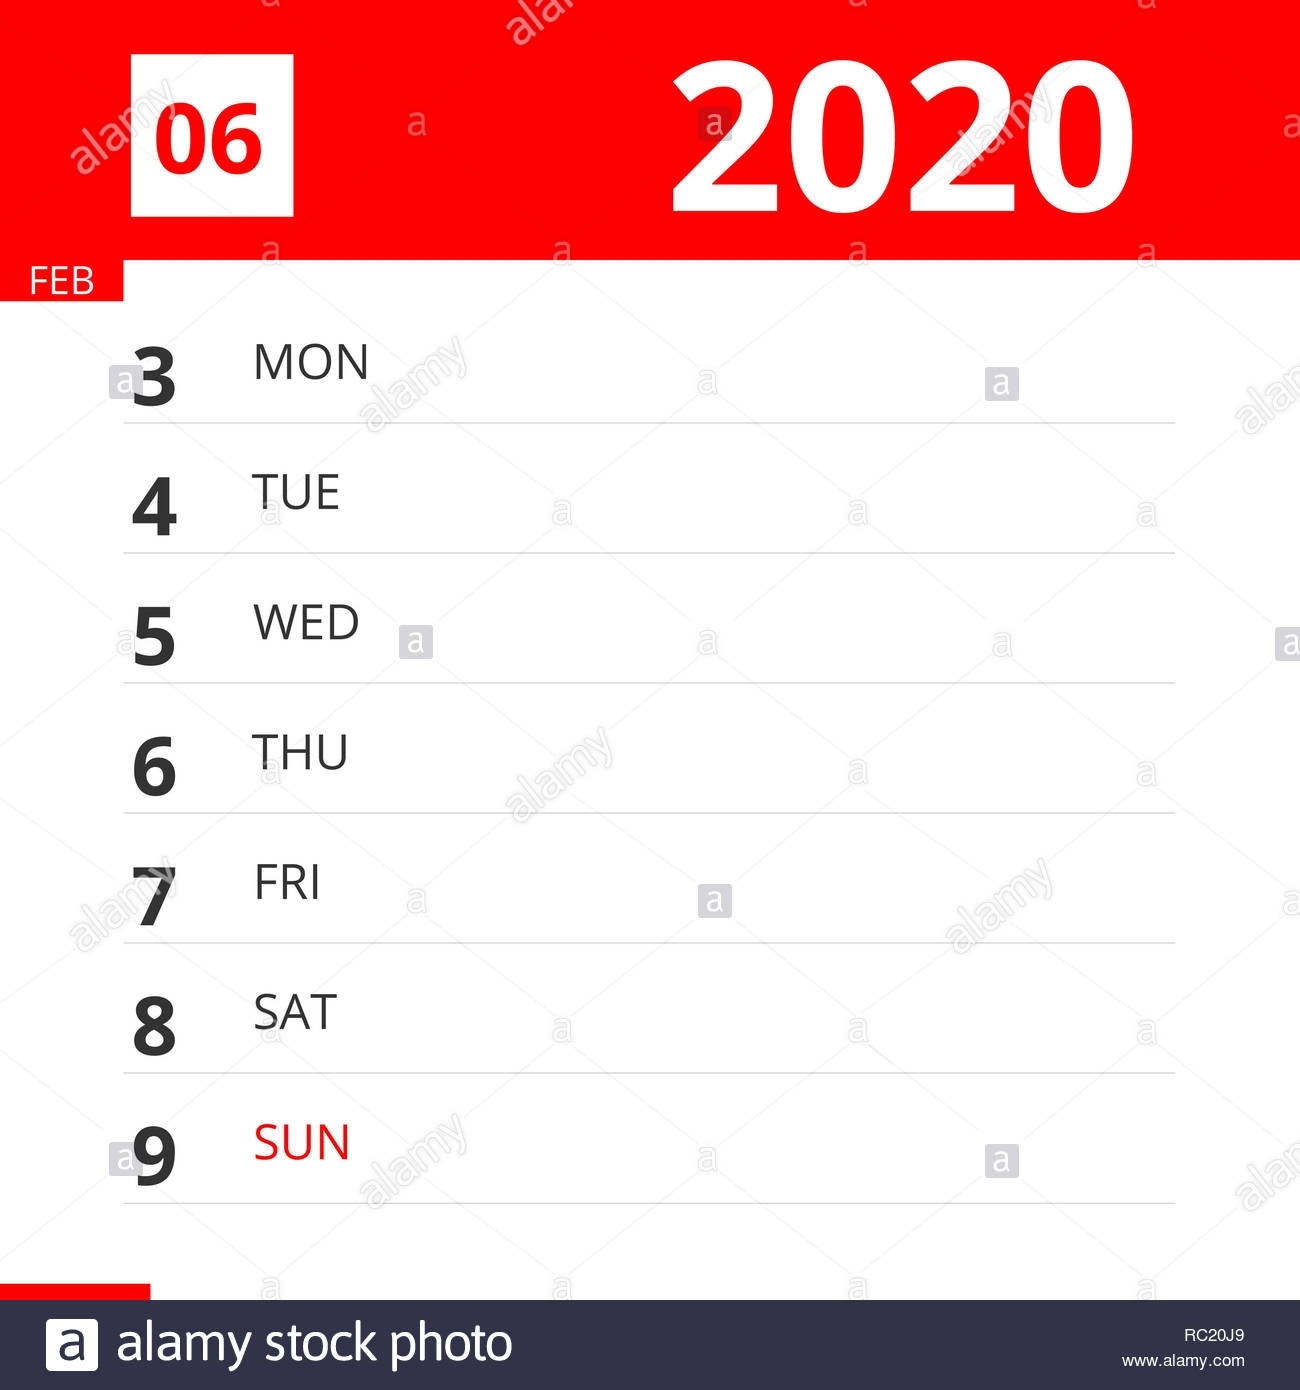 Calendar Planner For Week 06 In 2020, Ends February 9, 2020